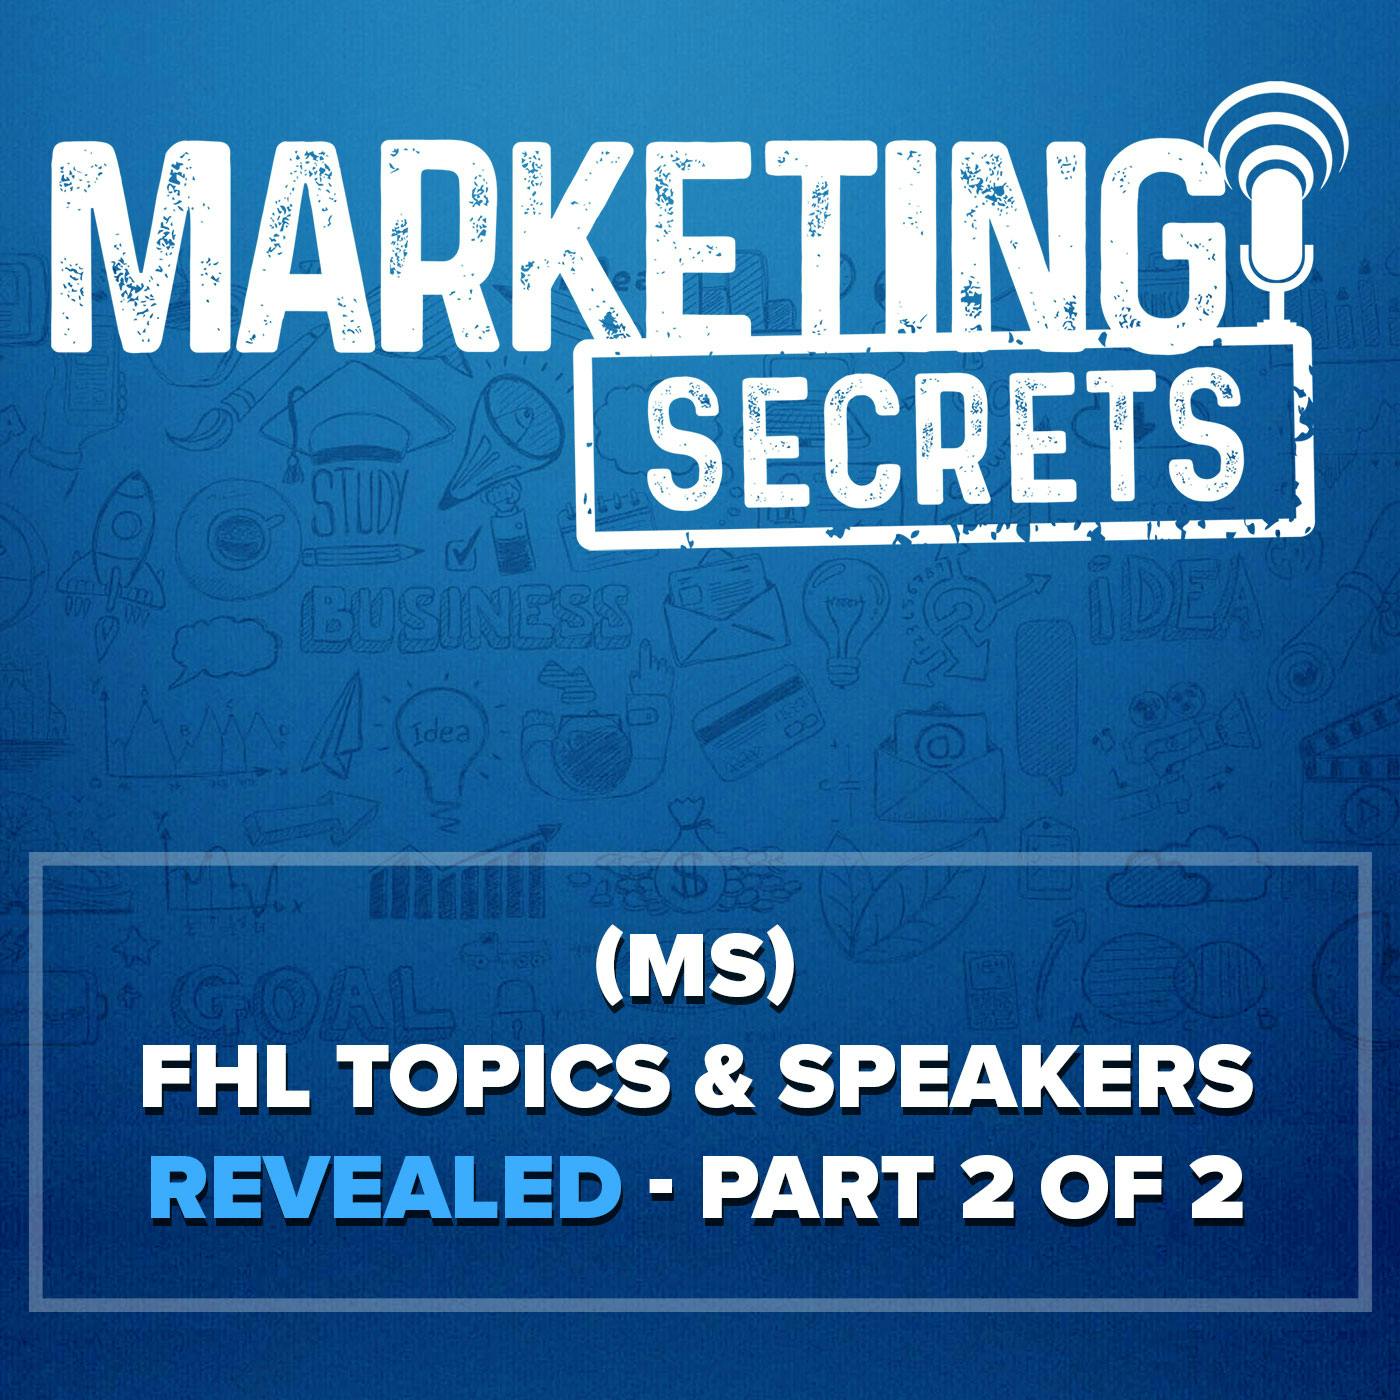 (MS) FHL Topics & Speakers REVEALED - Part 2 of 2